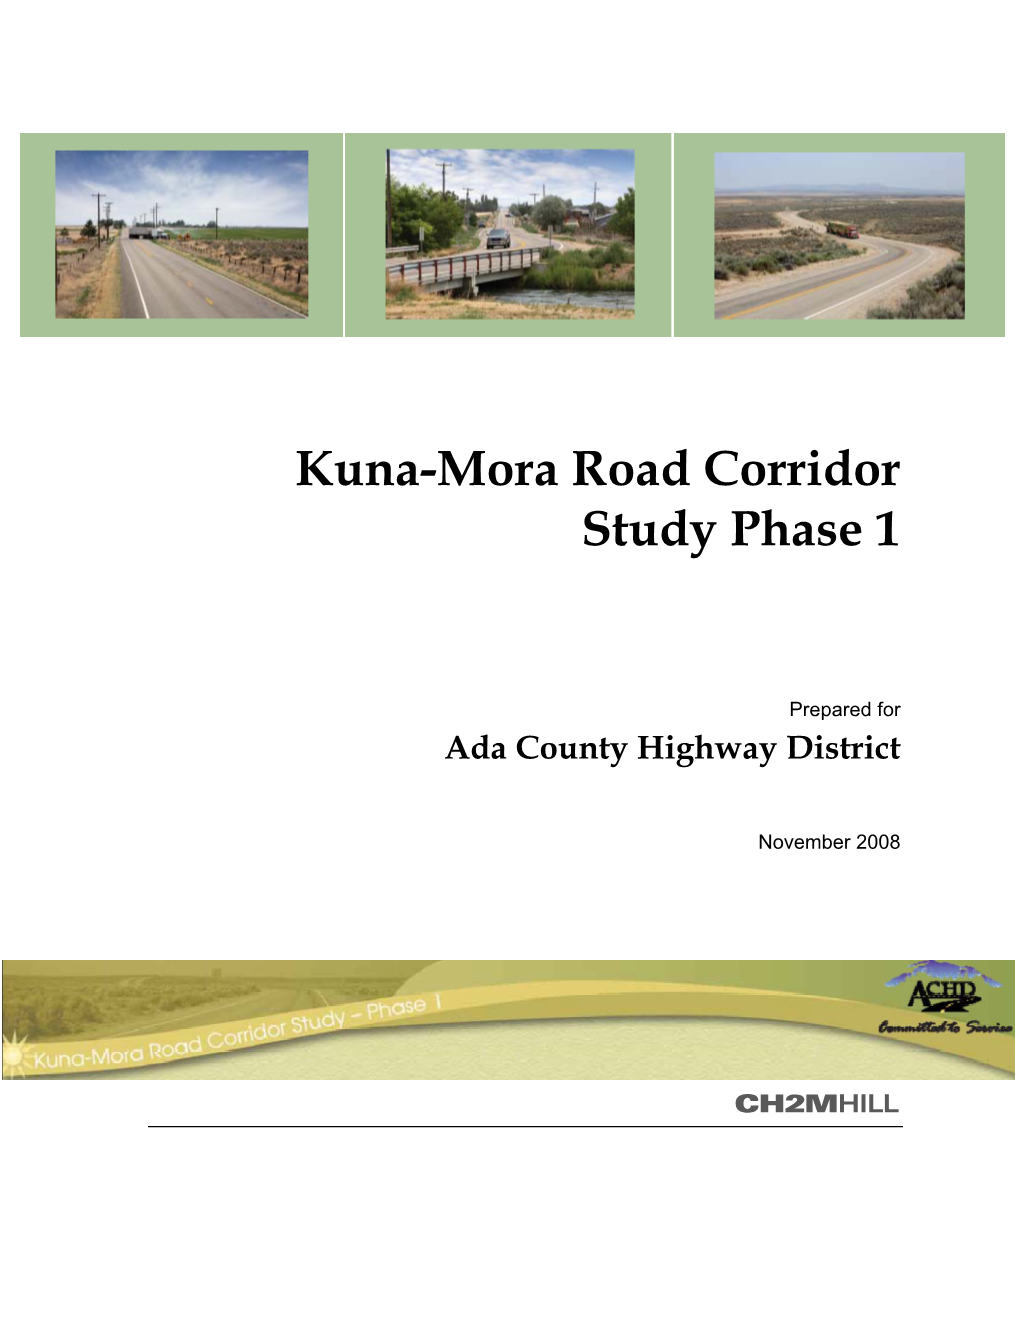 Kuna-Mora Road Corridor Study Phase 1